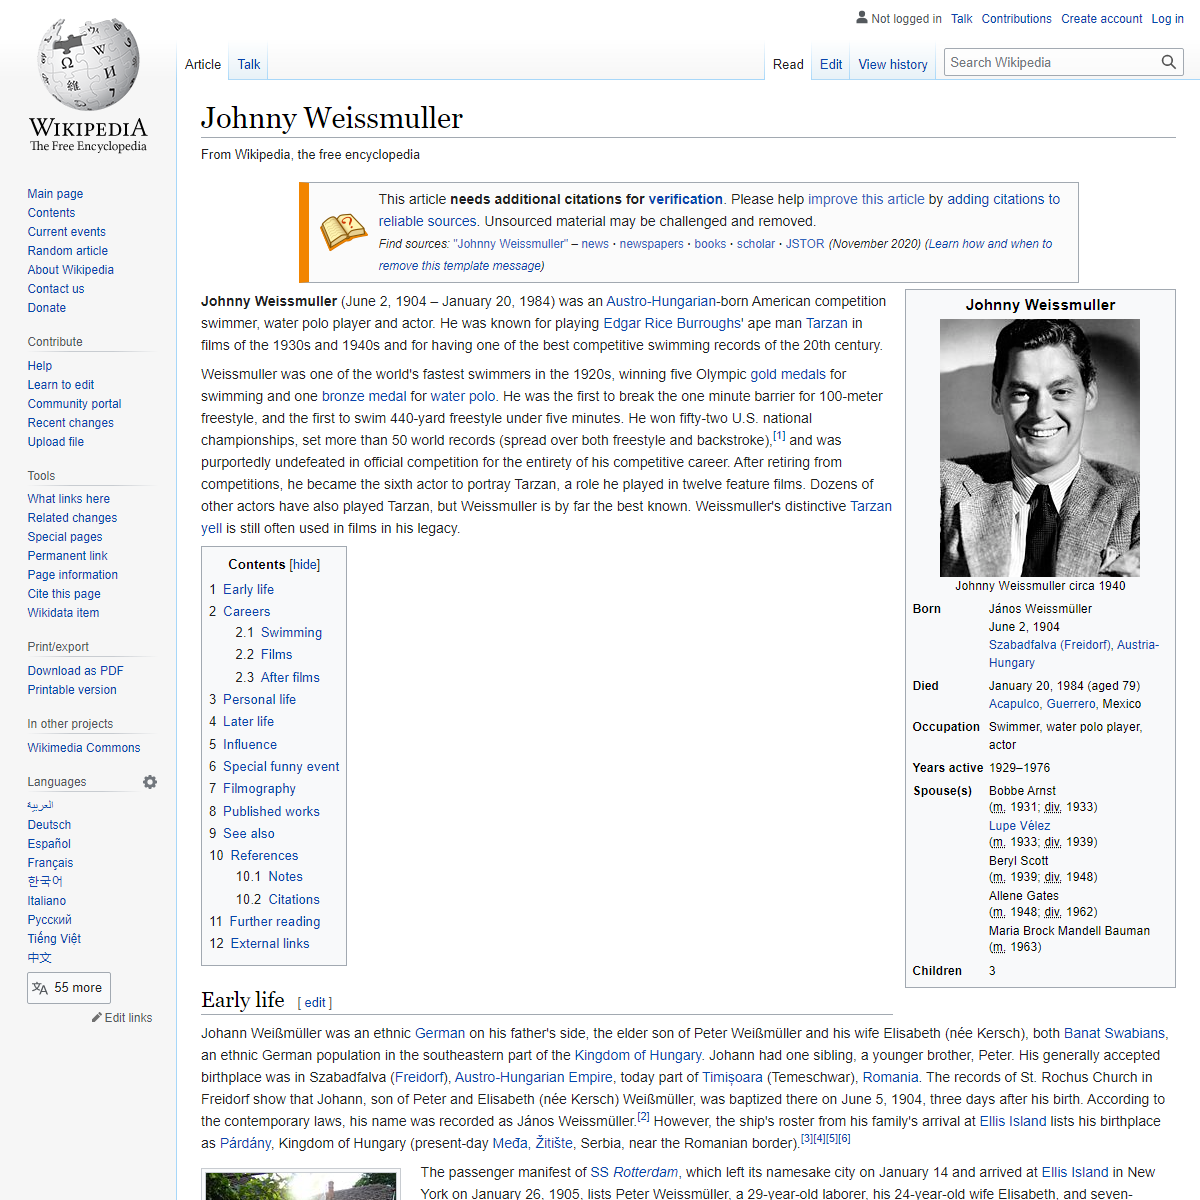 A complete backup of https://en.wikipedia.org/wiki/Johnny_Weissmuller